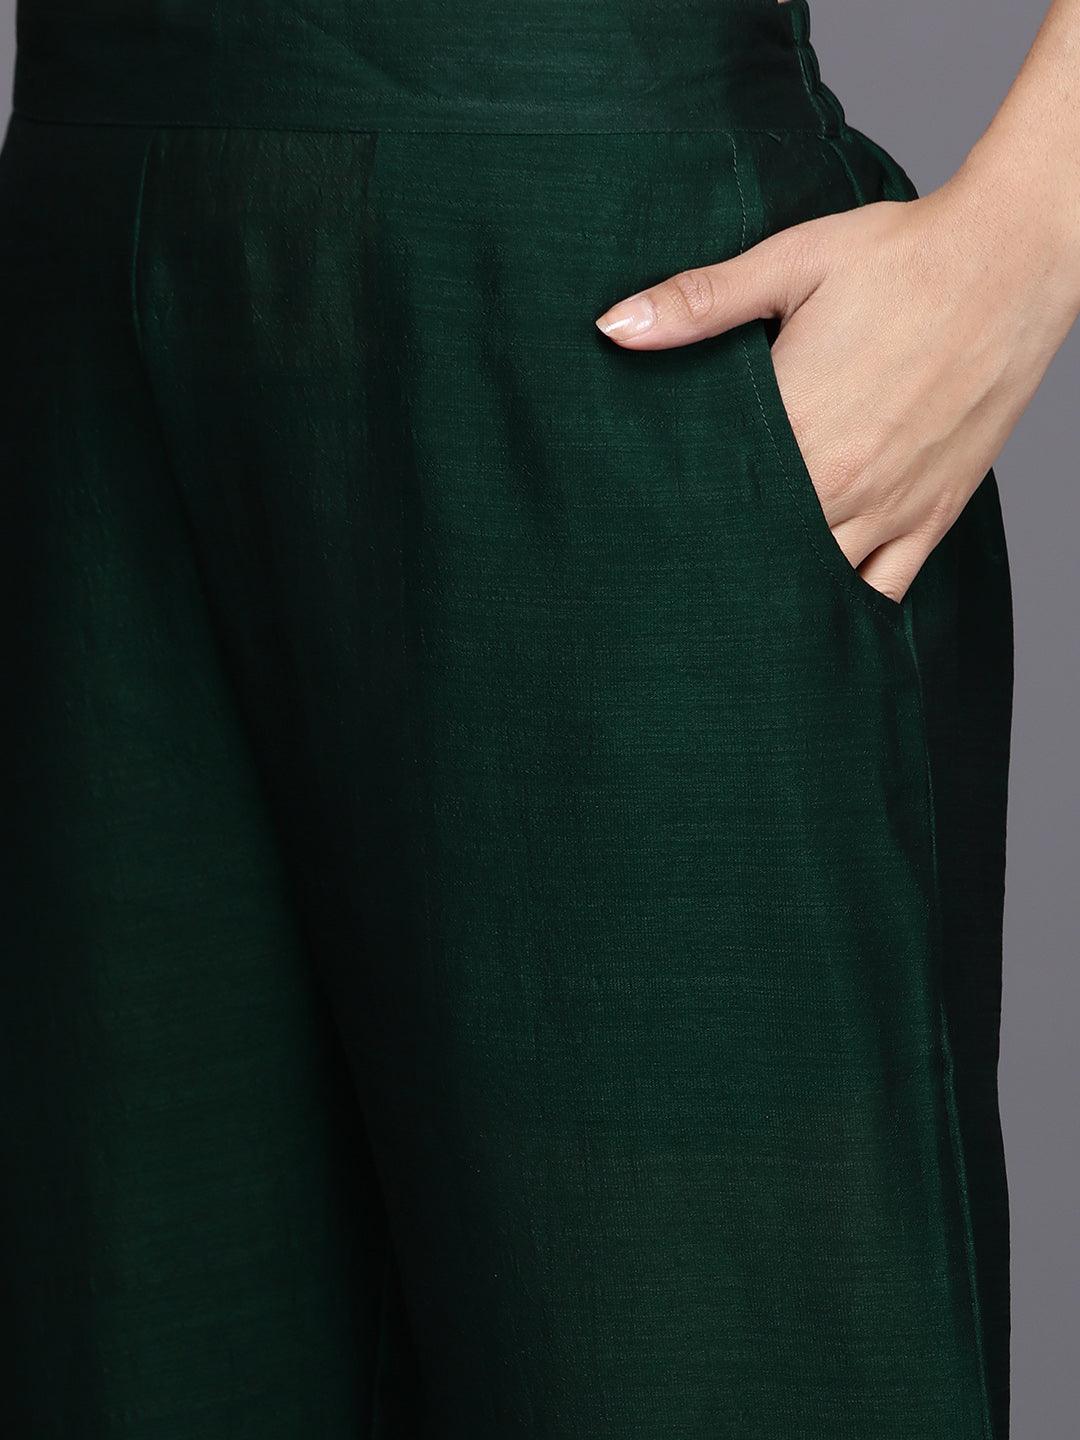 Green Solid Silk Blend Straight Kurta With Trousers & Dupatta - Libas